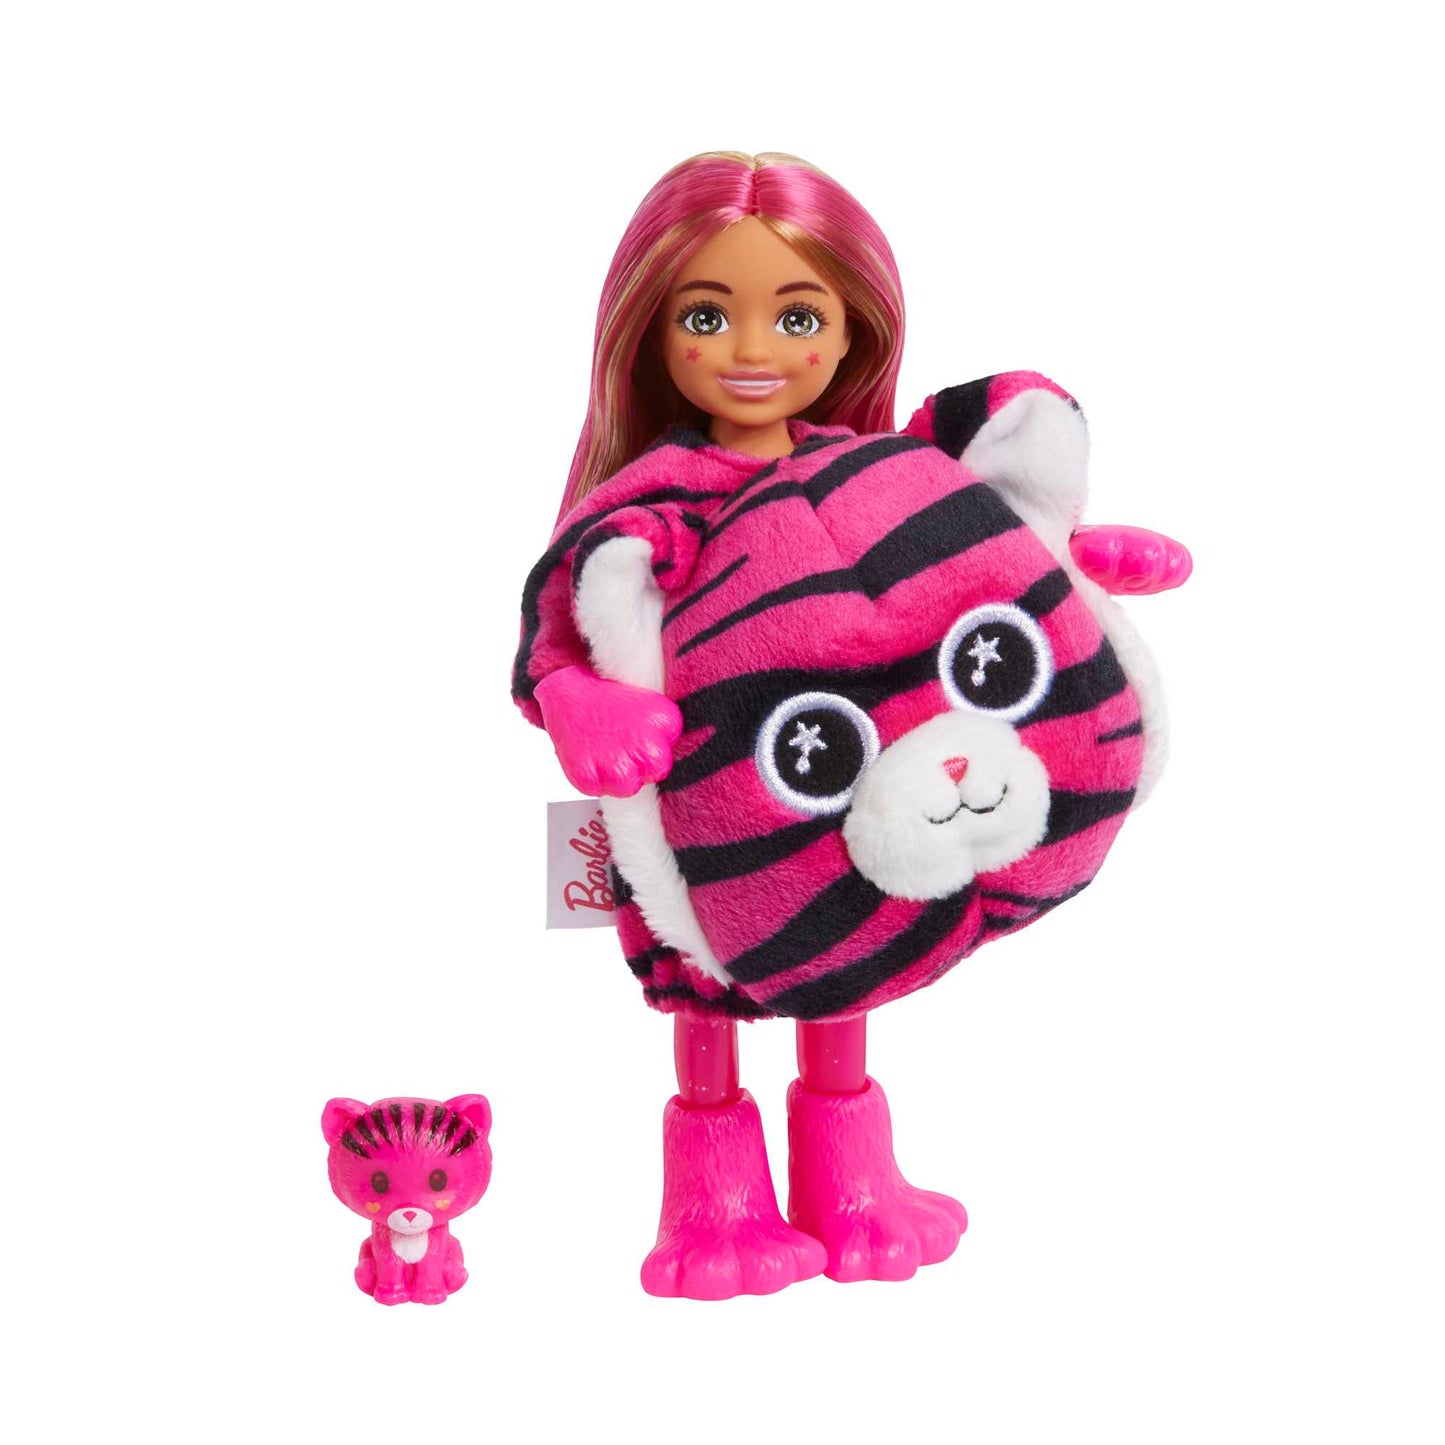 Barbie Cutie Reveal Jungle Series Doll - Assorted*